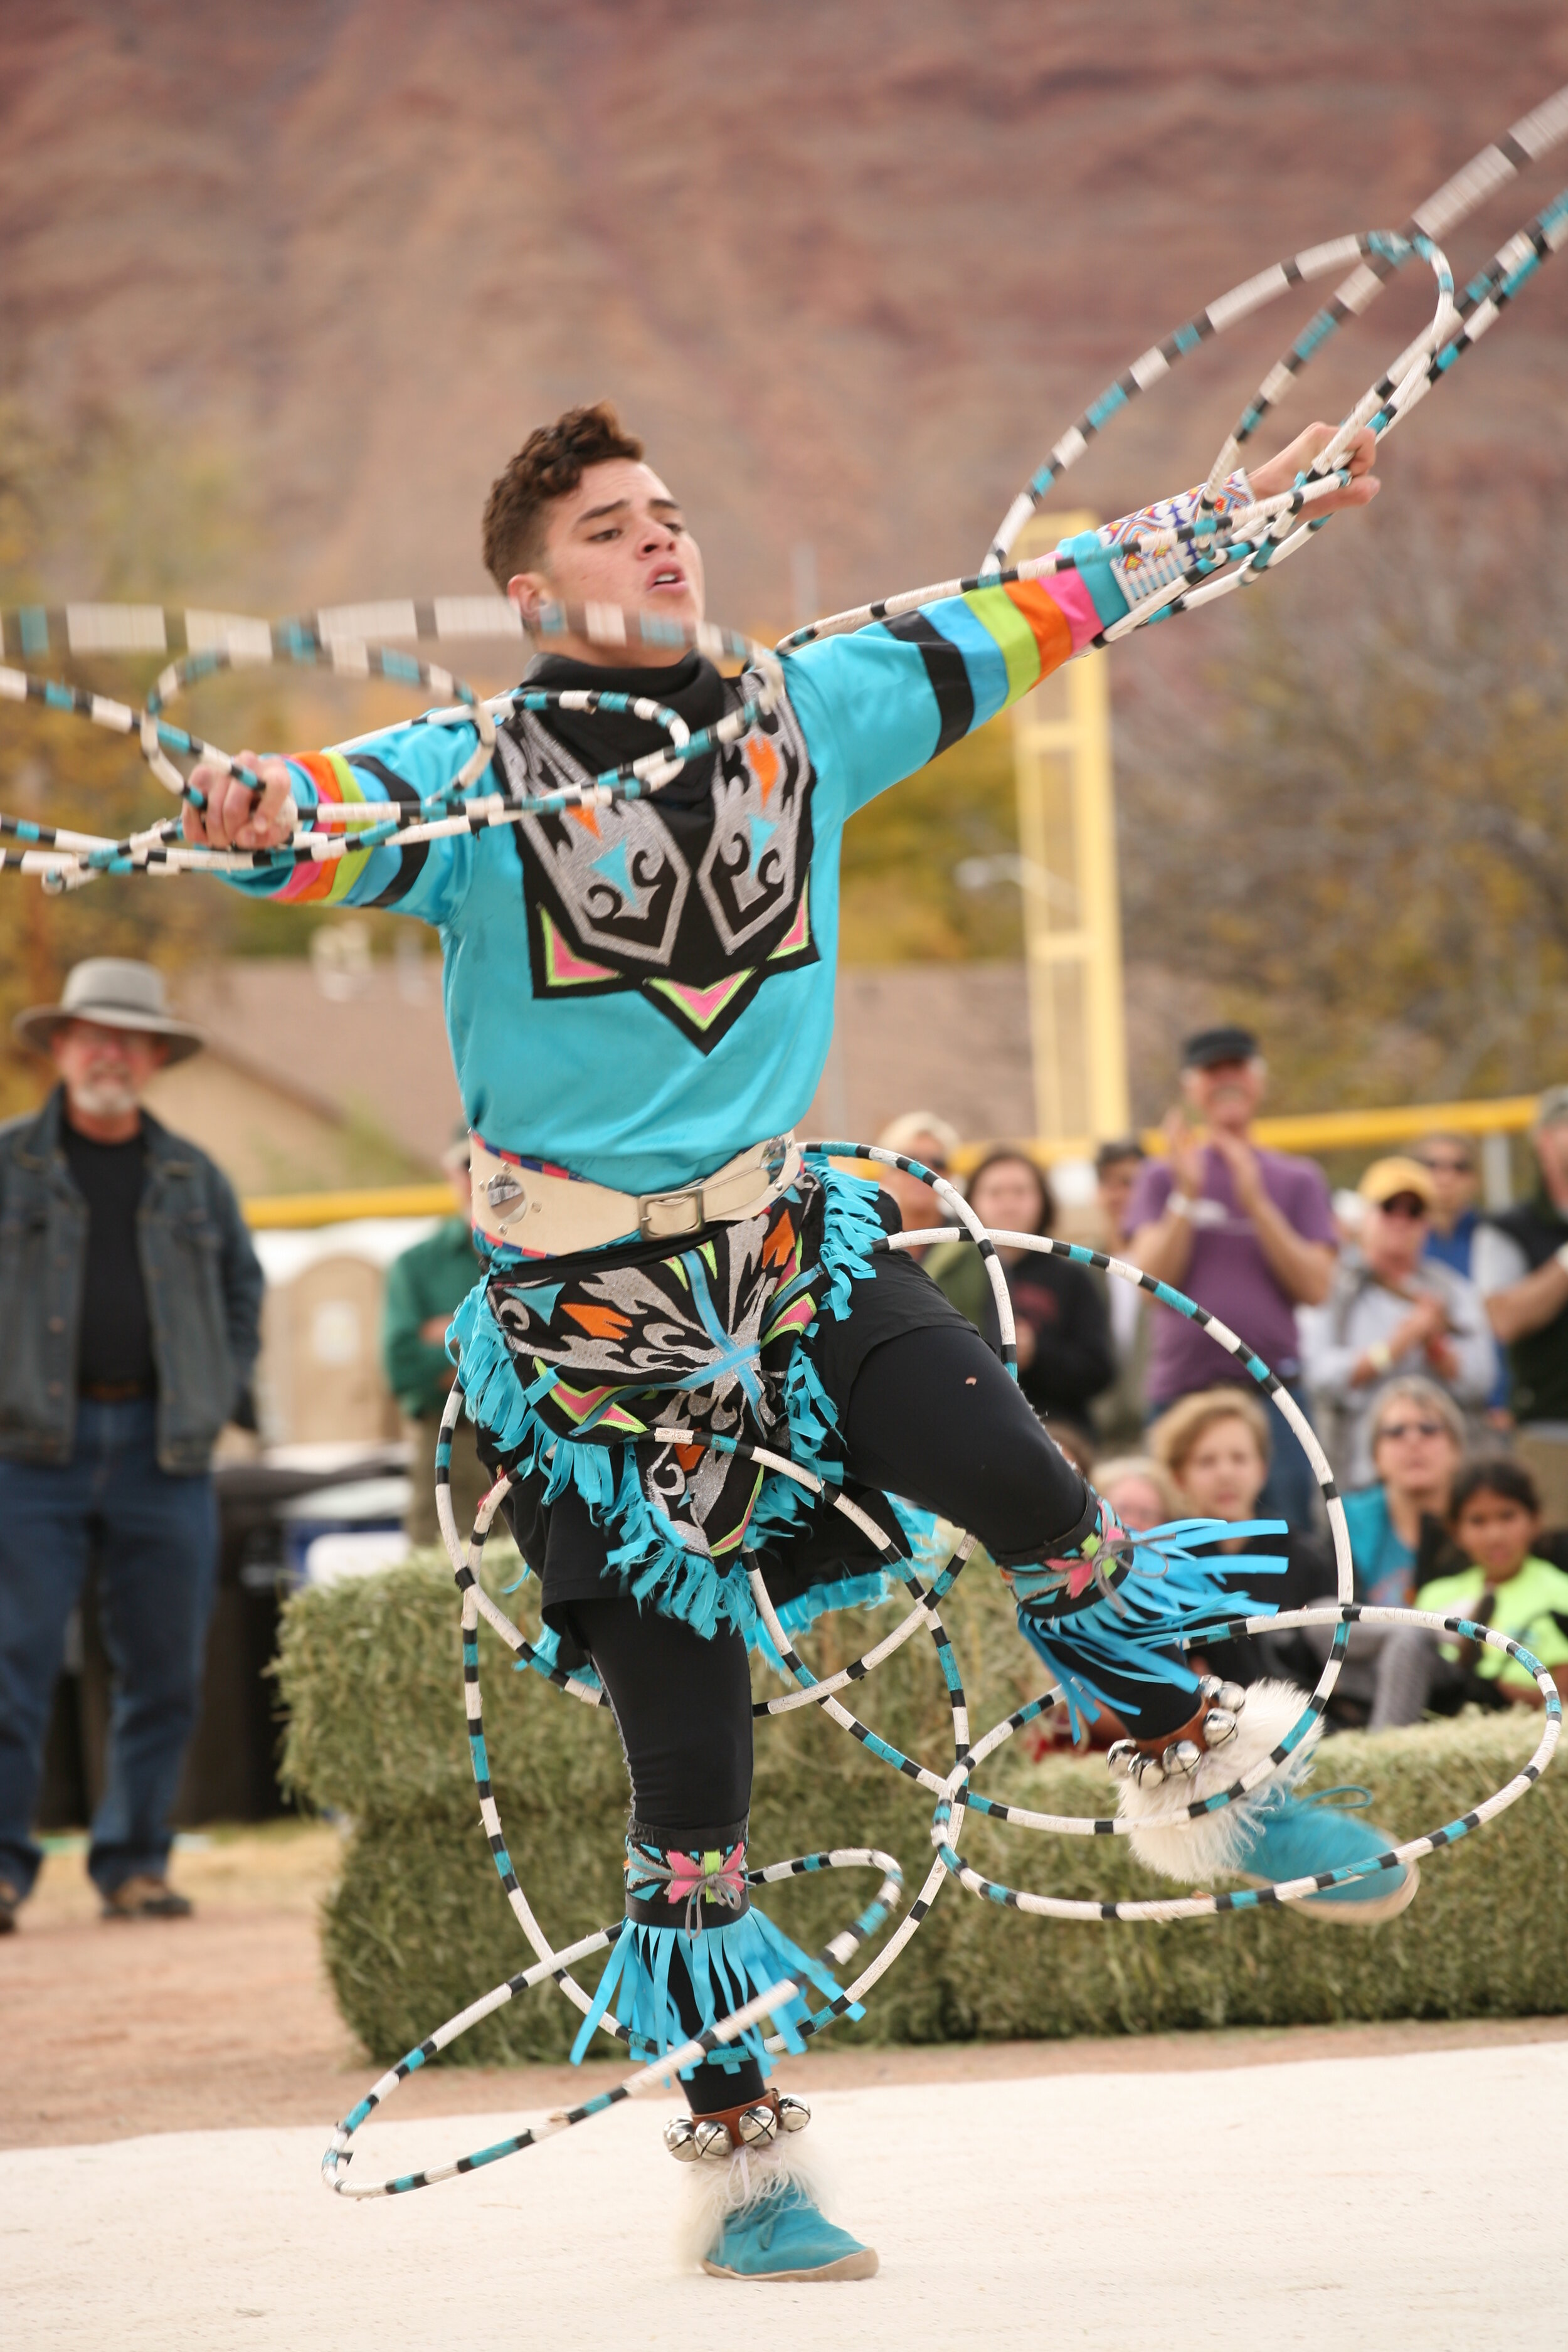 Moab Folk Festival